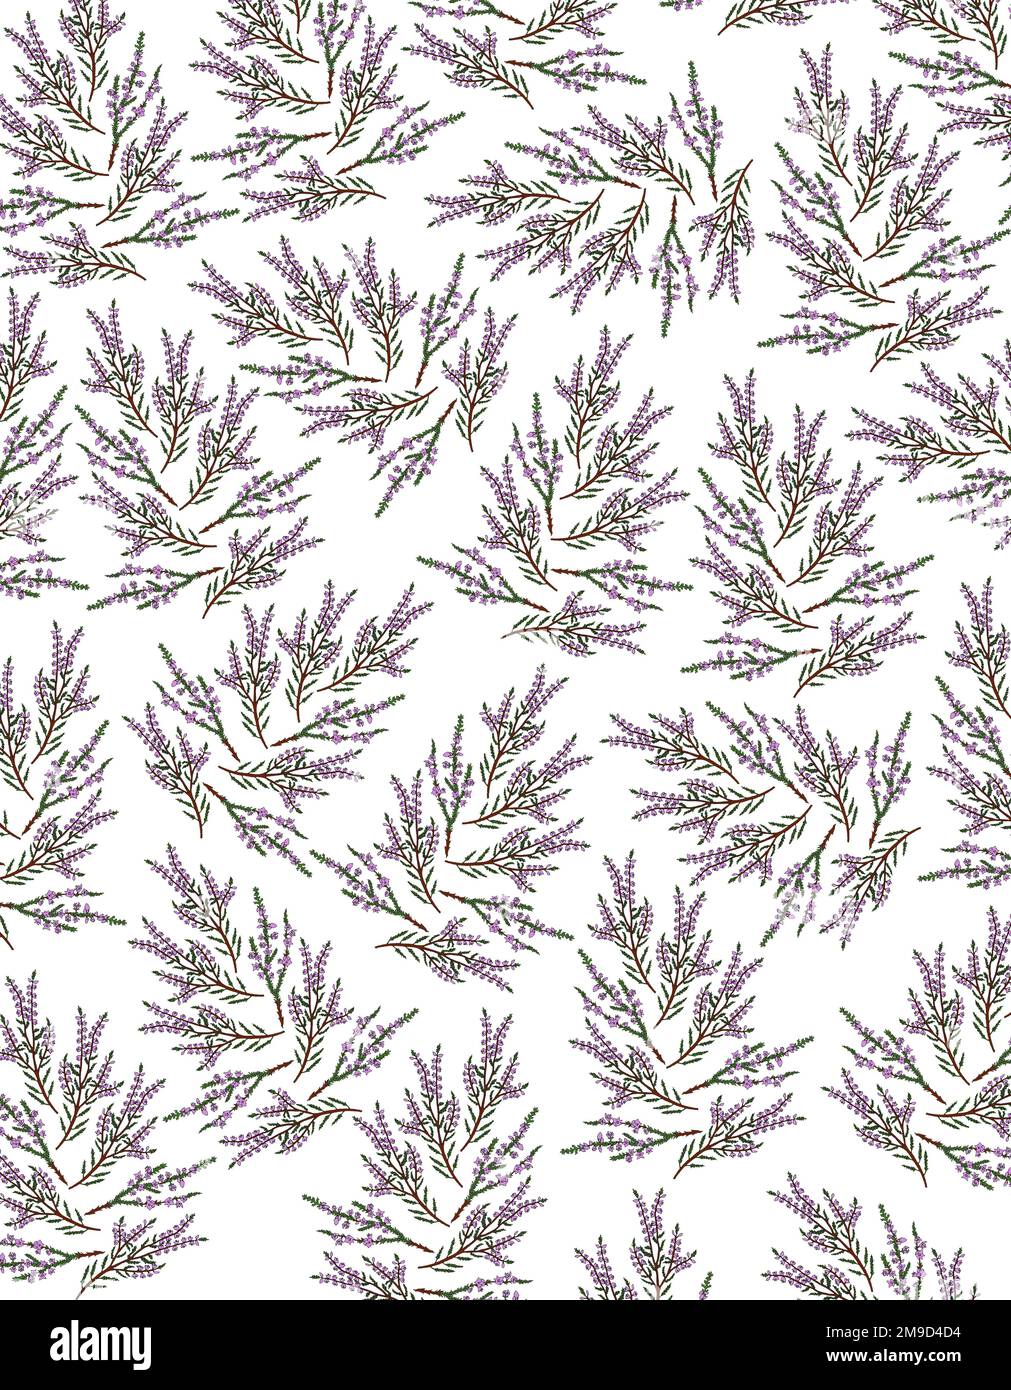 Pattern featuring sprigs of purple heather. Stock Photo